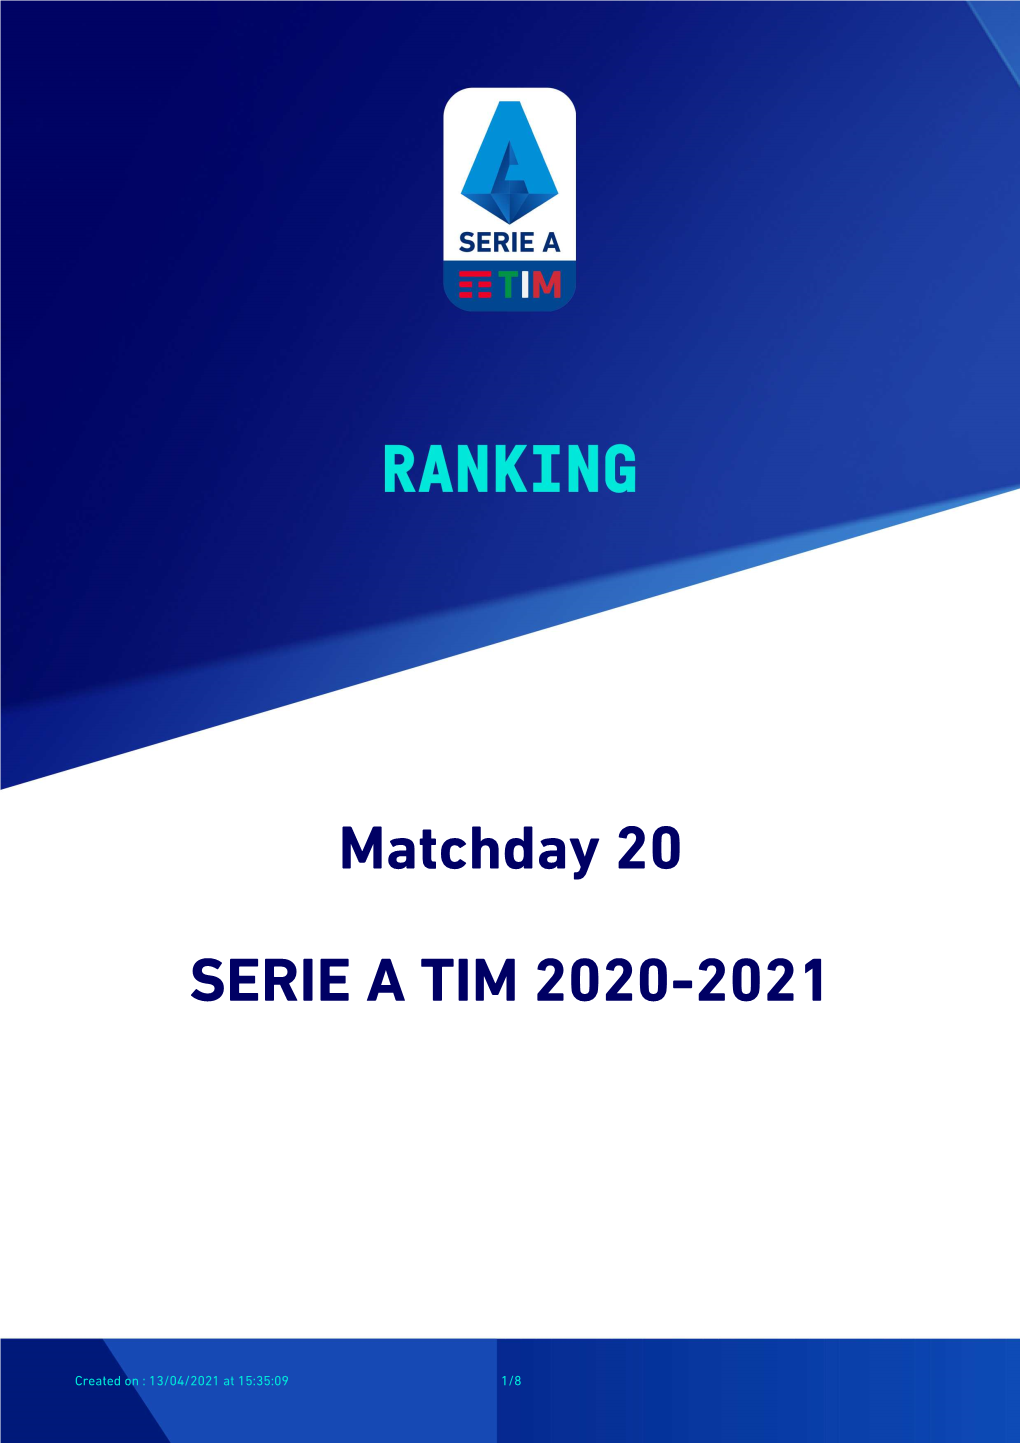 Matchday 20 SERIE a TIM 2020-2021